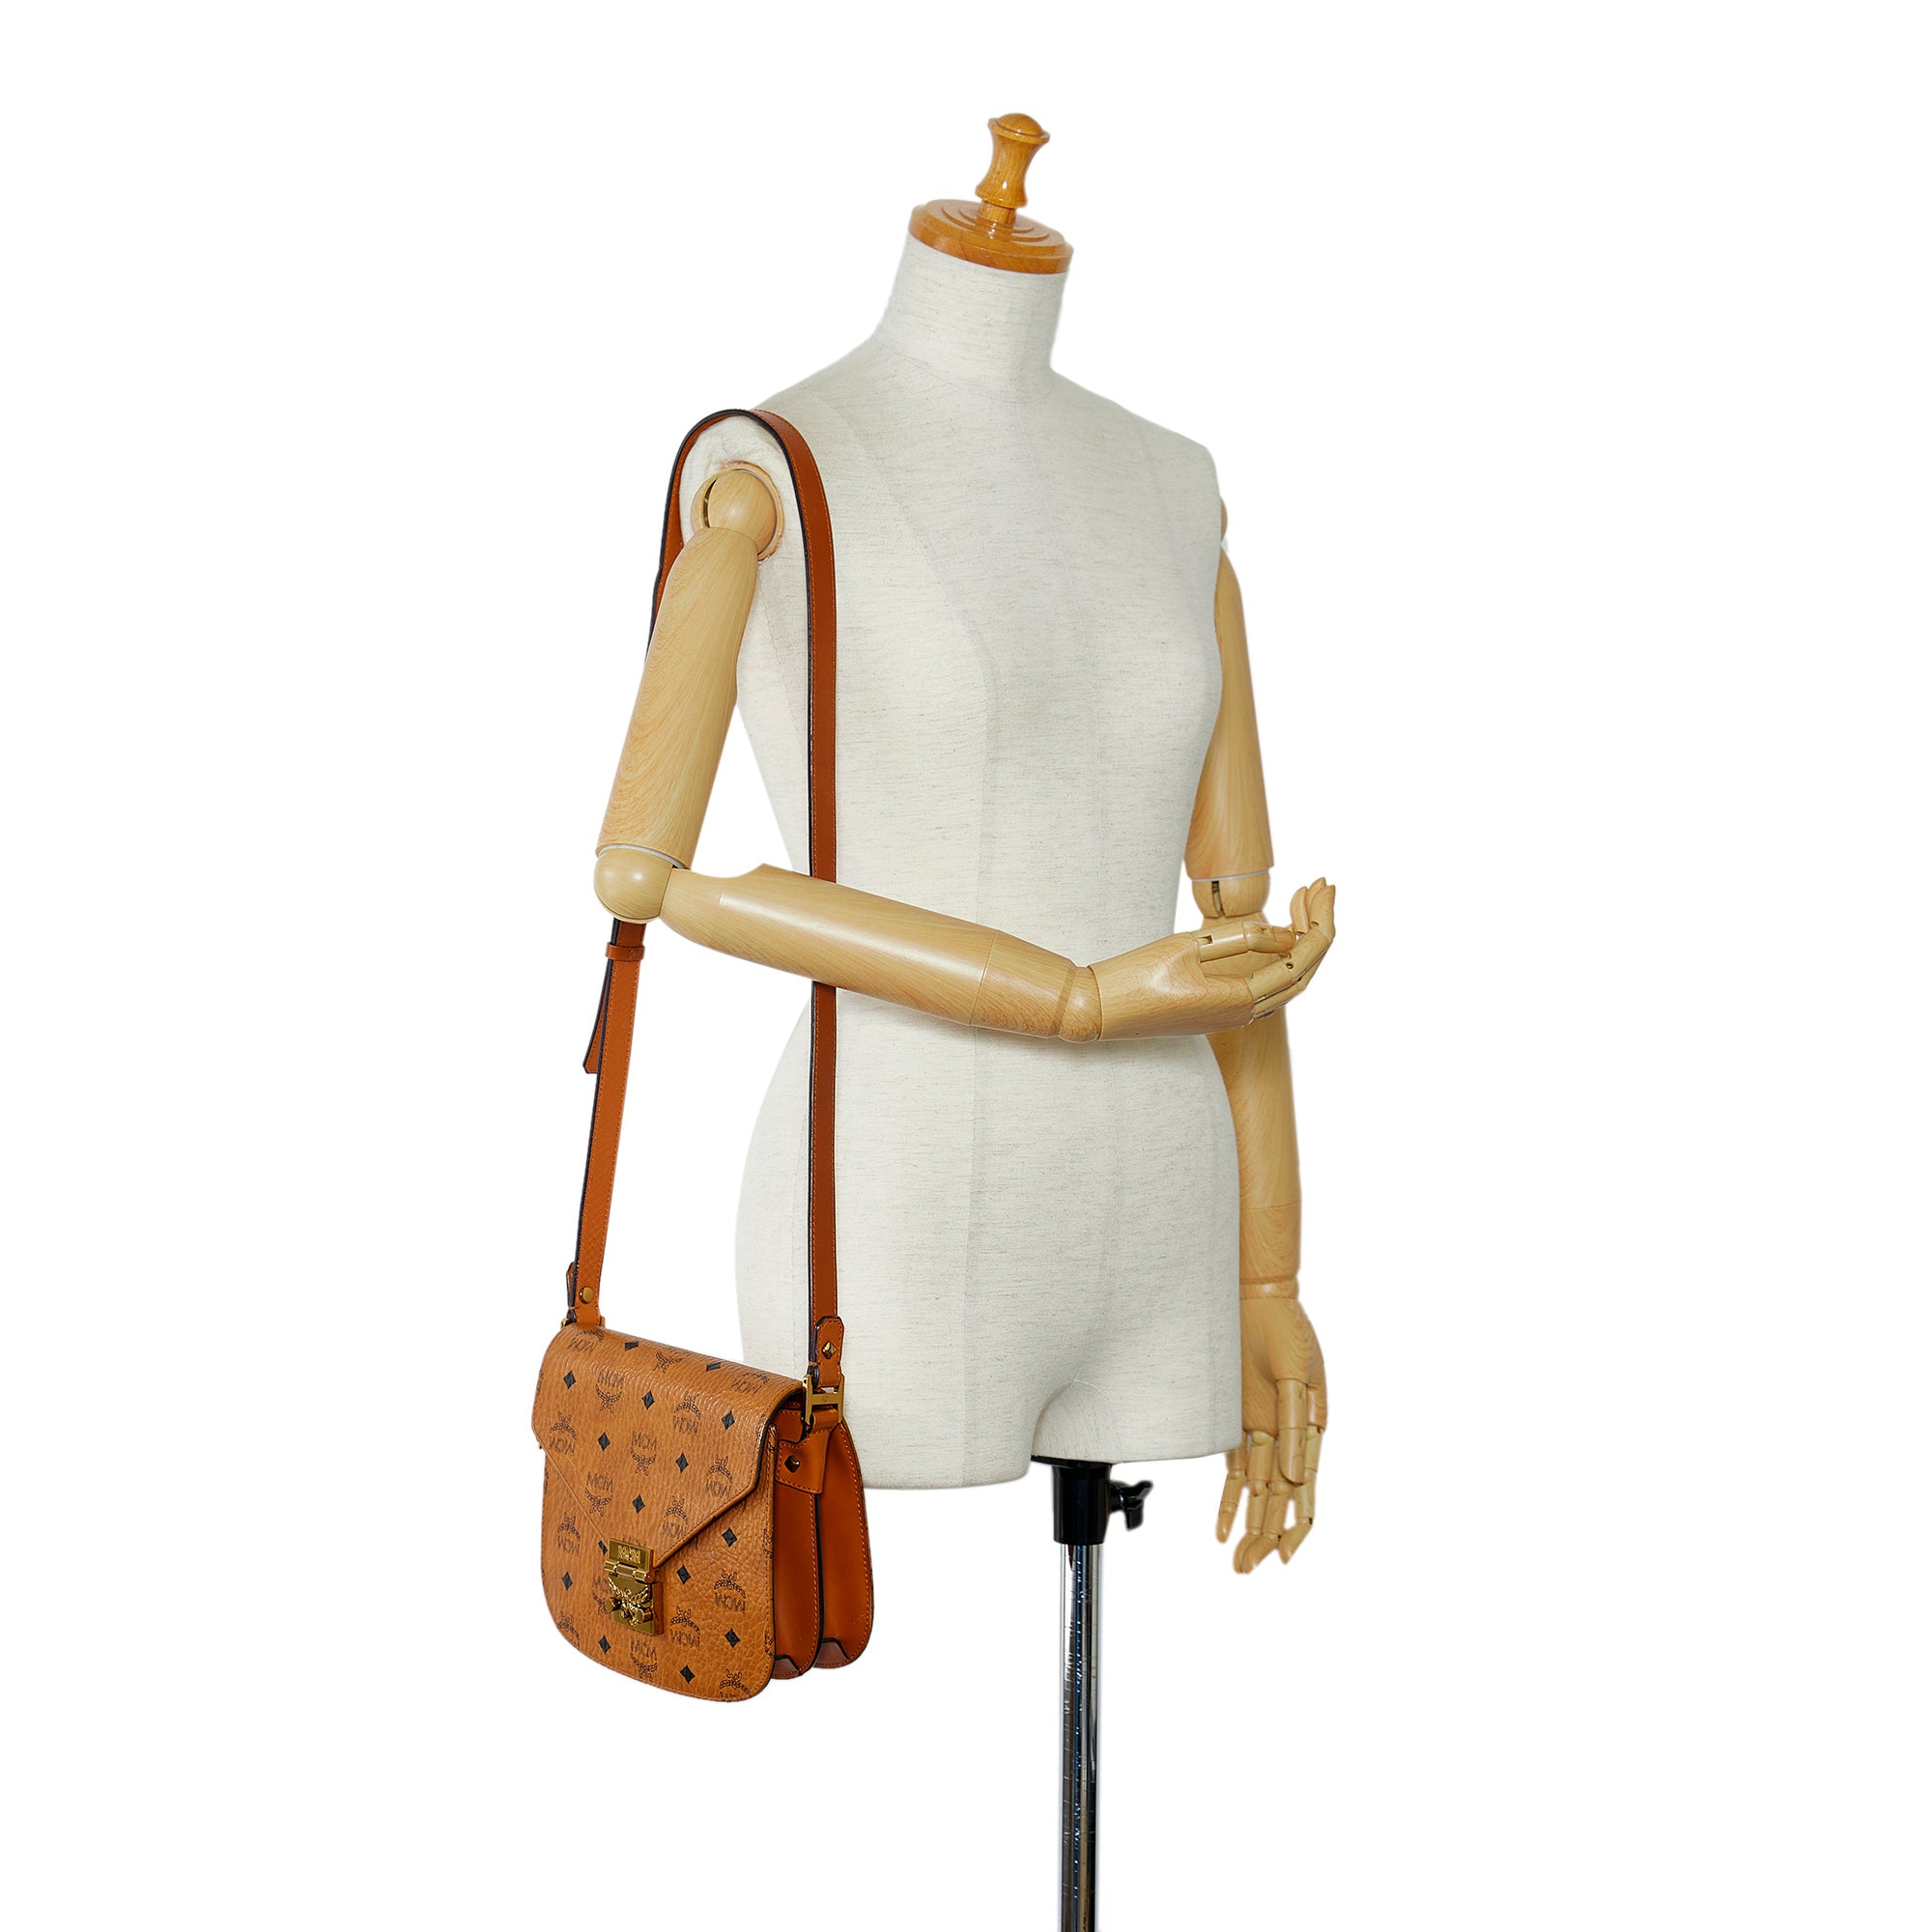 MCM Mini Leather Visetos Patricia Cross-body Bag in Brown